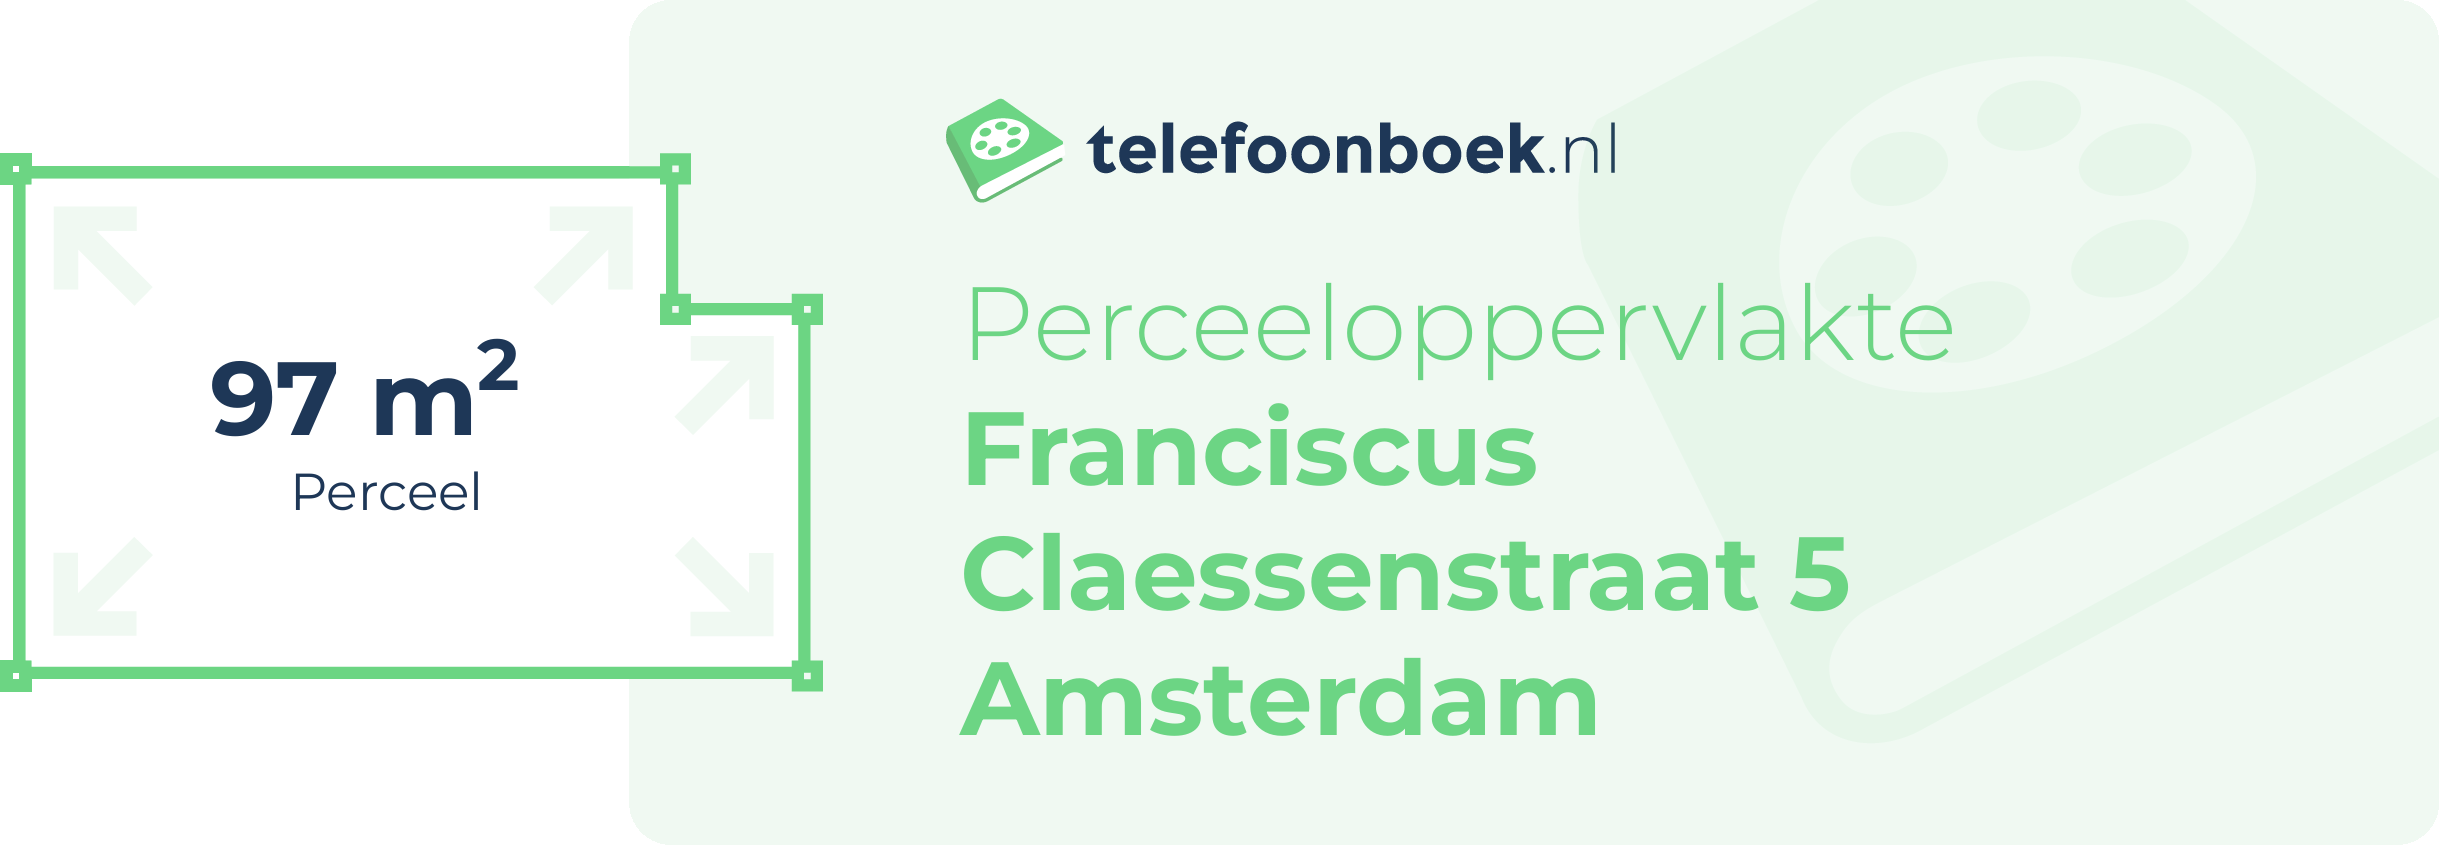 Perceeloppervlakte Franciscus Claessenstraat 5 Amsterdam